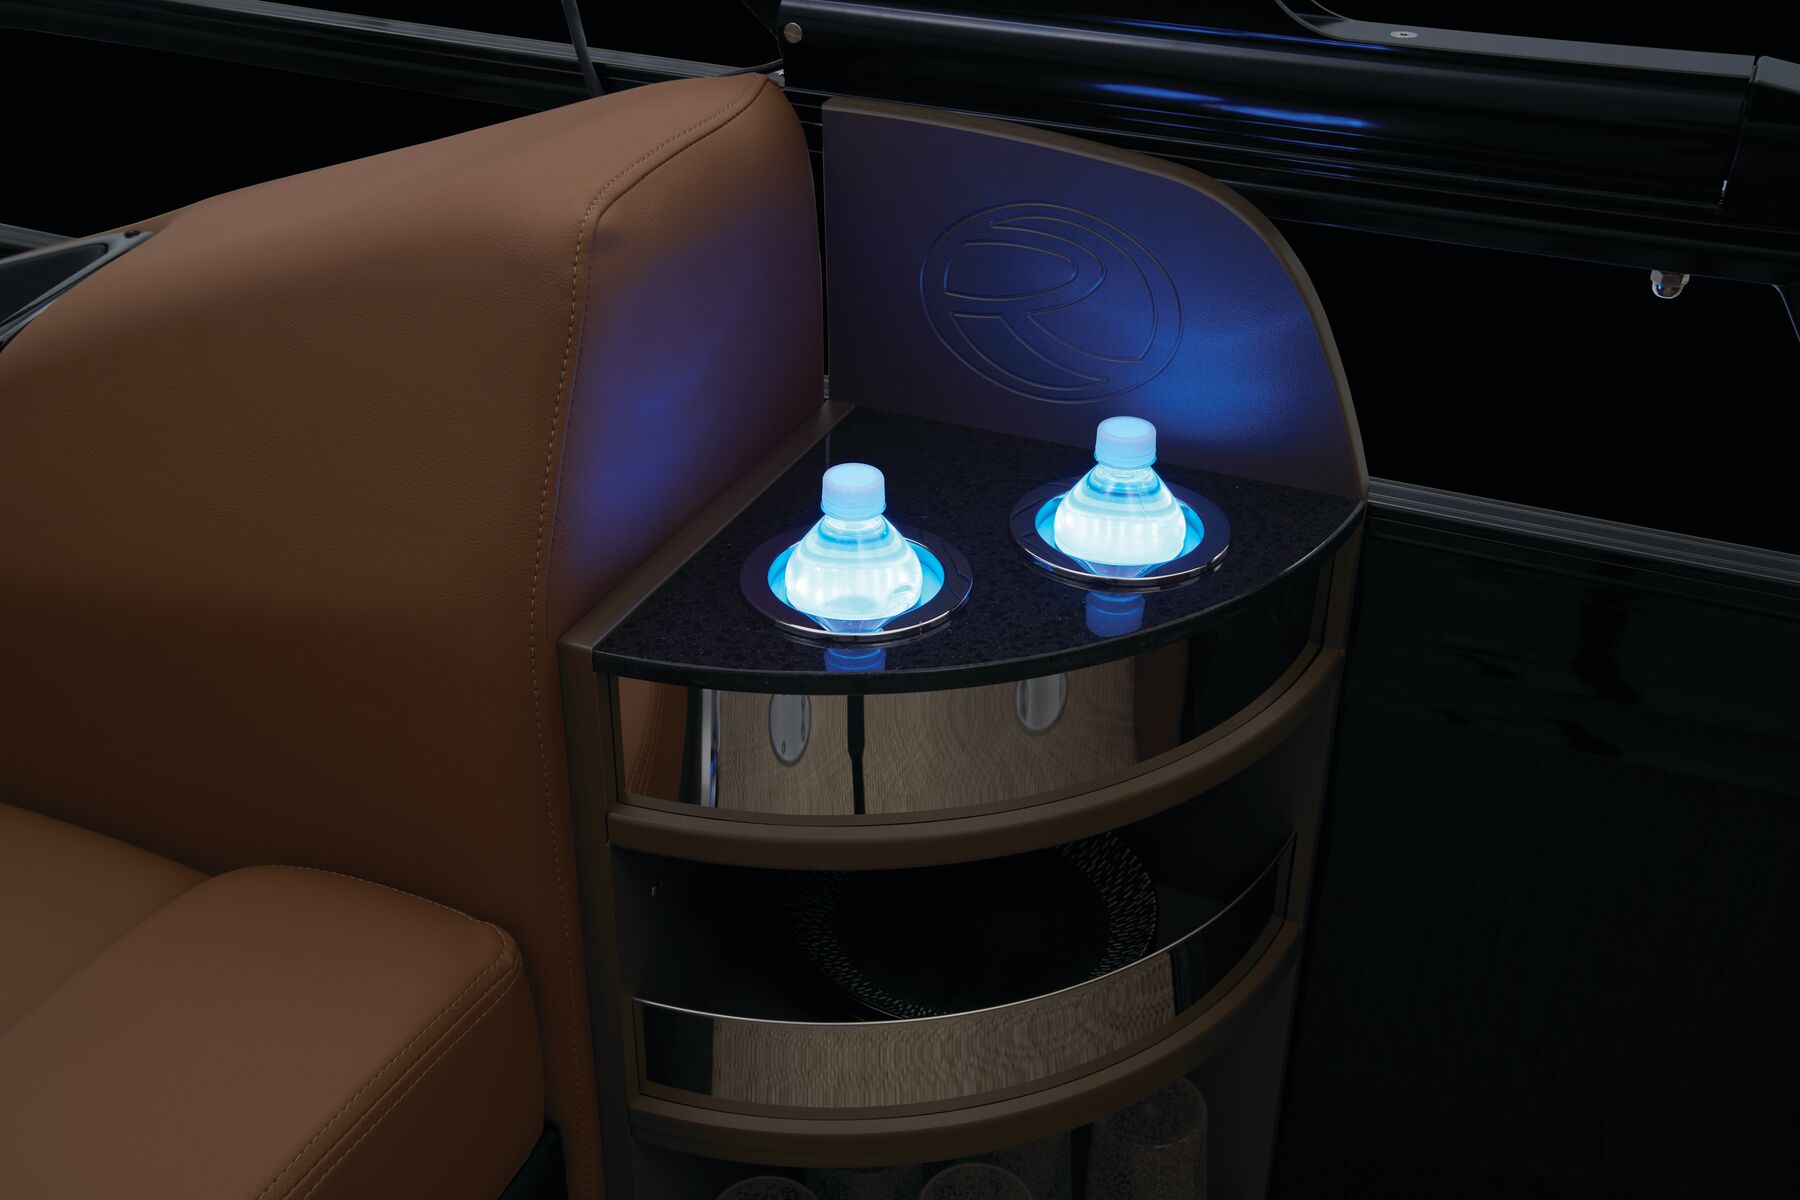 Illuminated drink holders